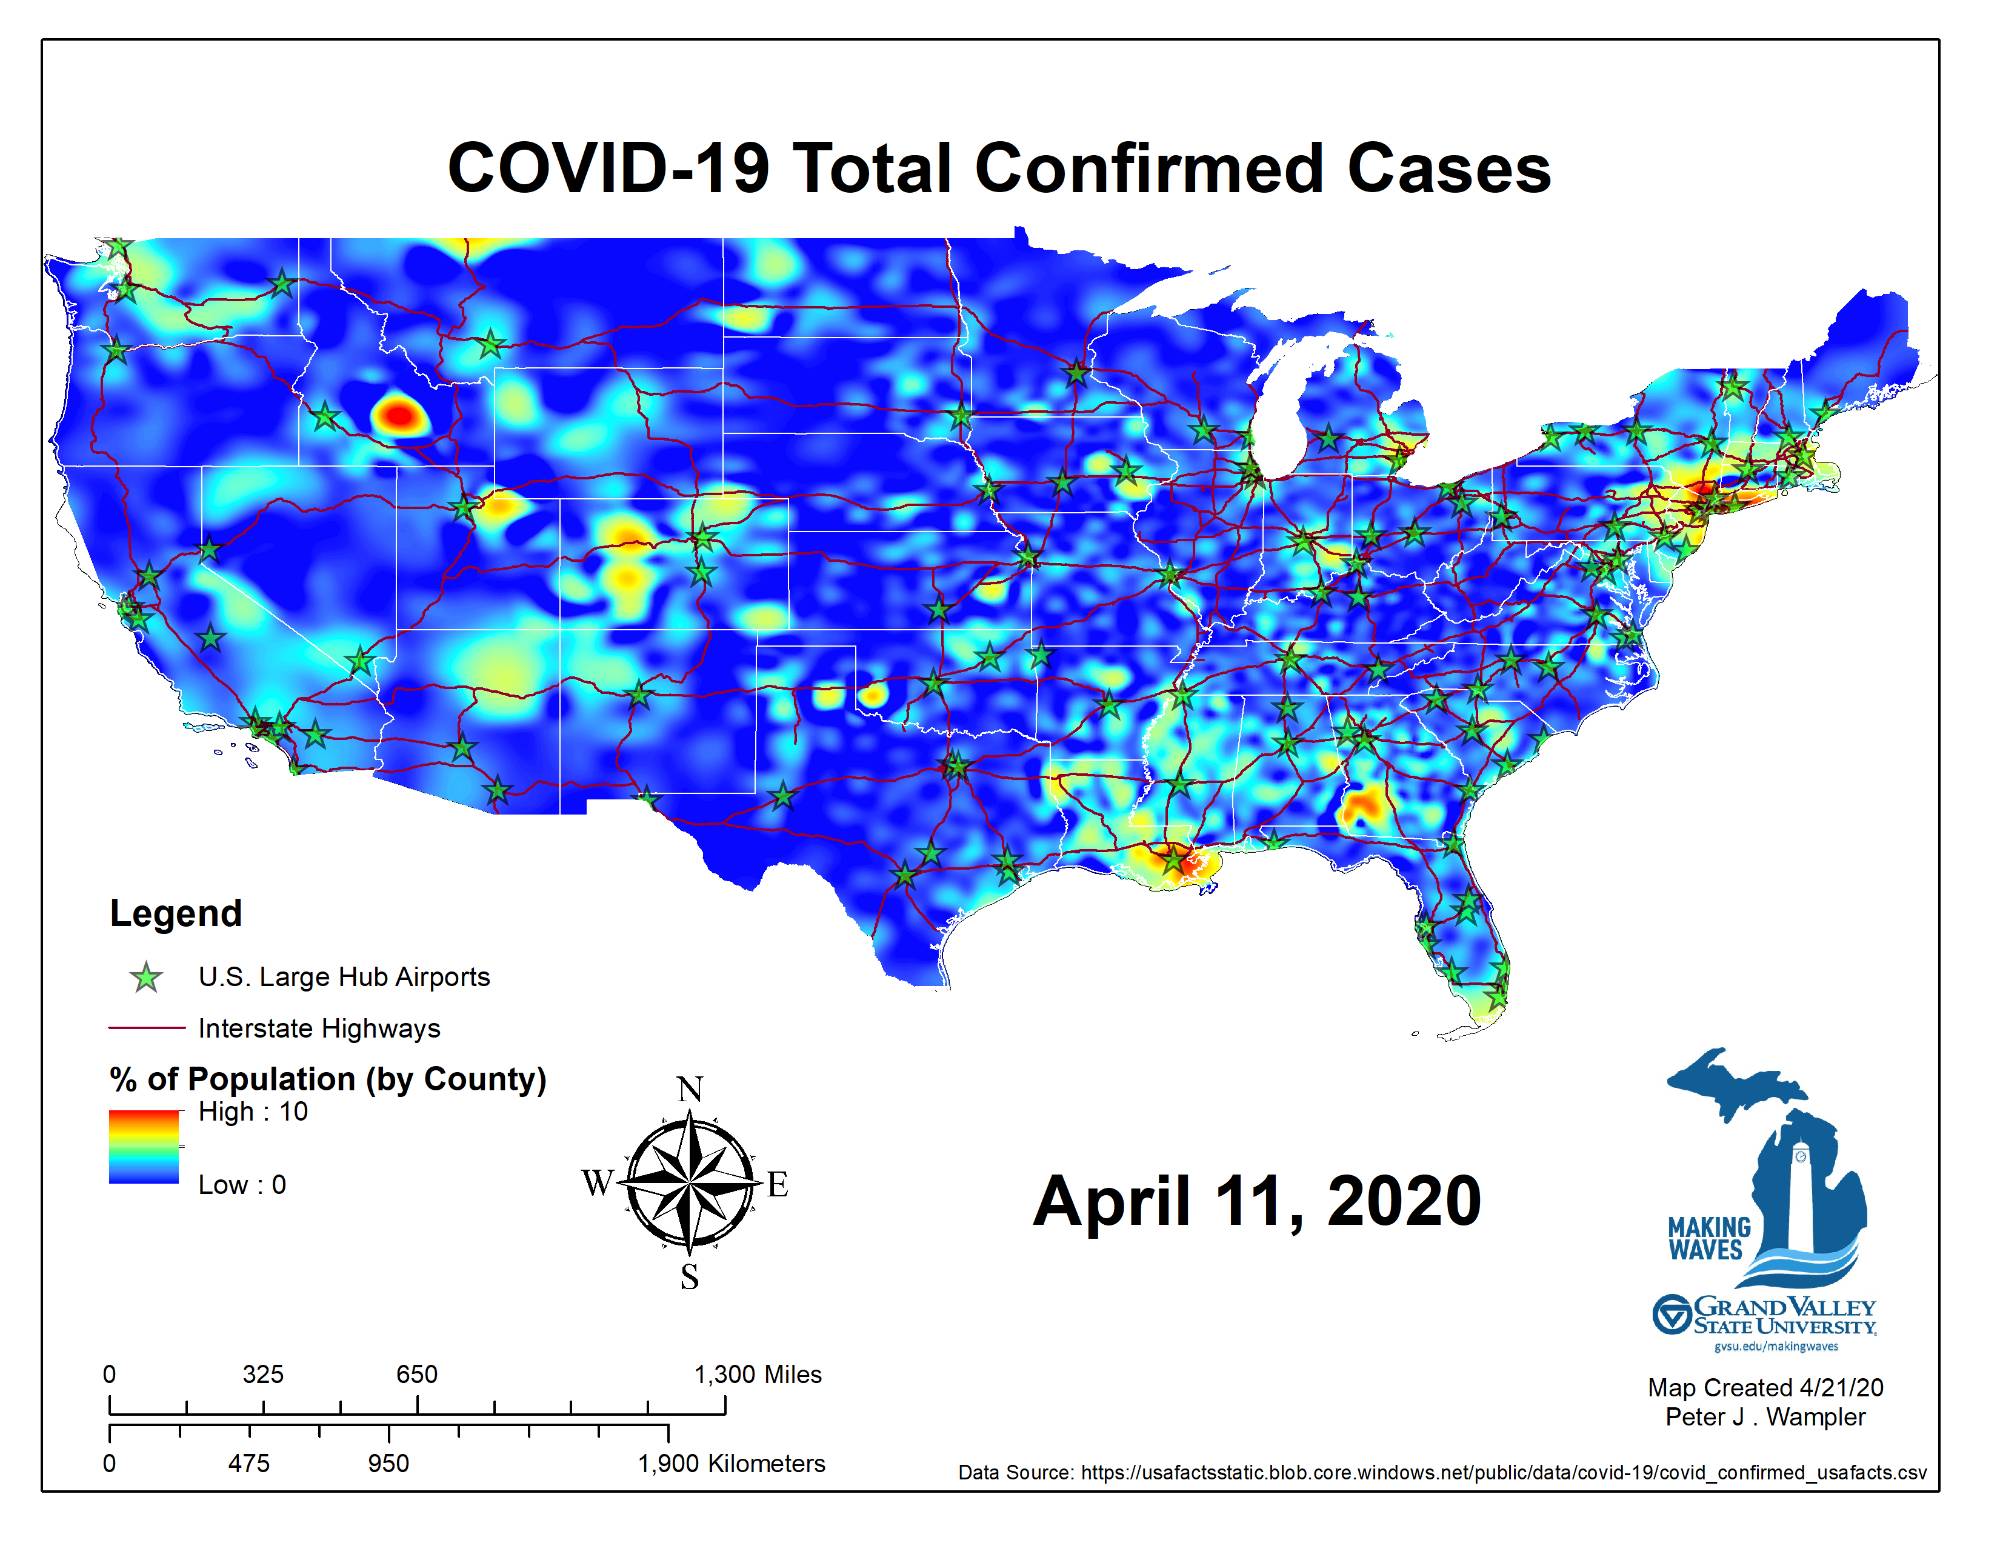 COVID-19 in the US, April 11